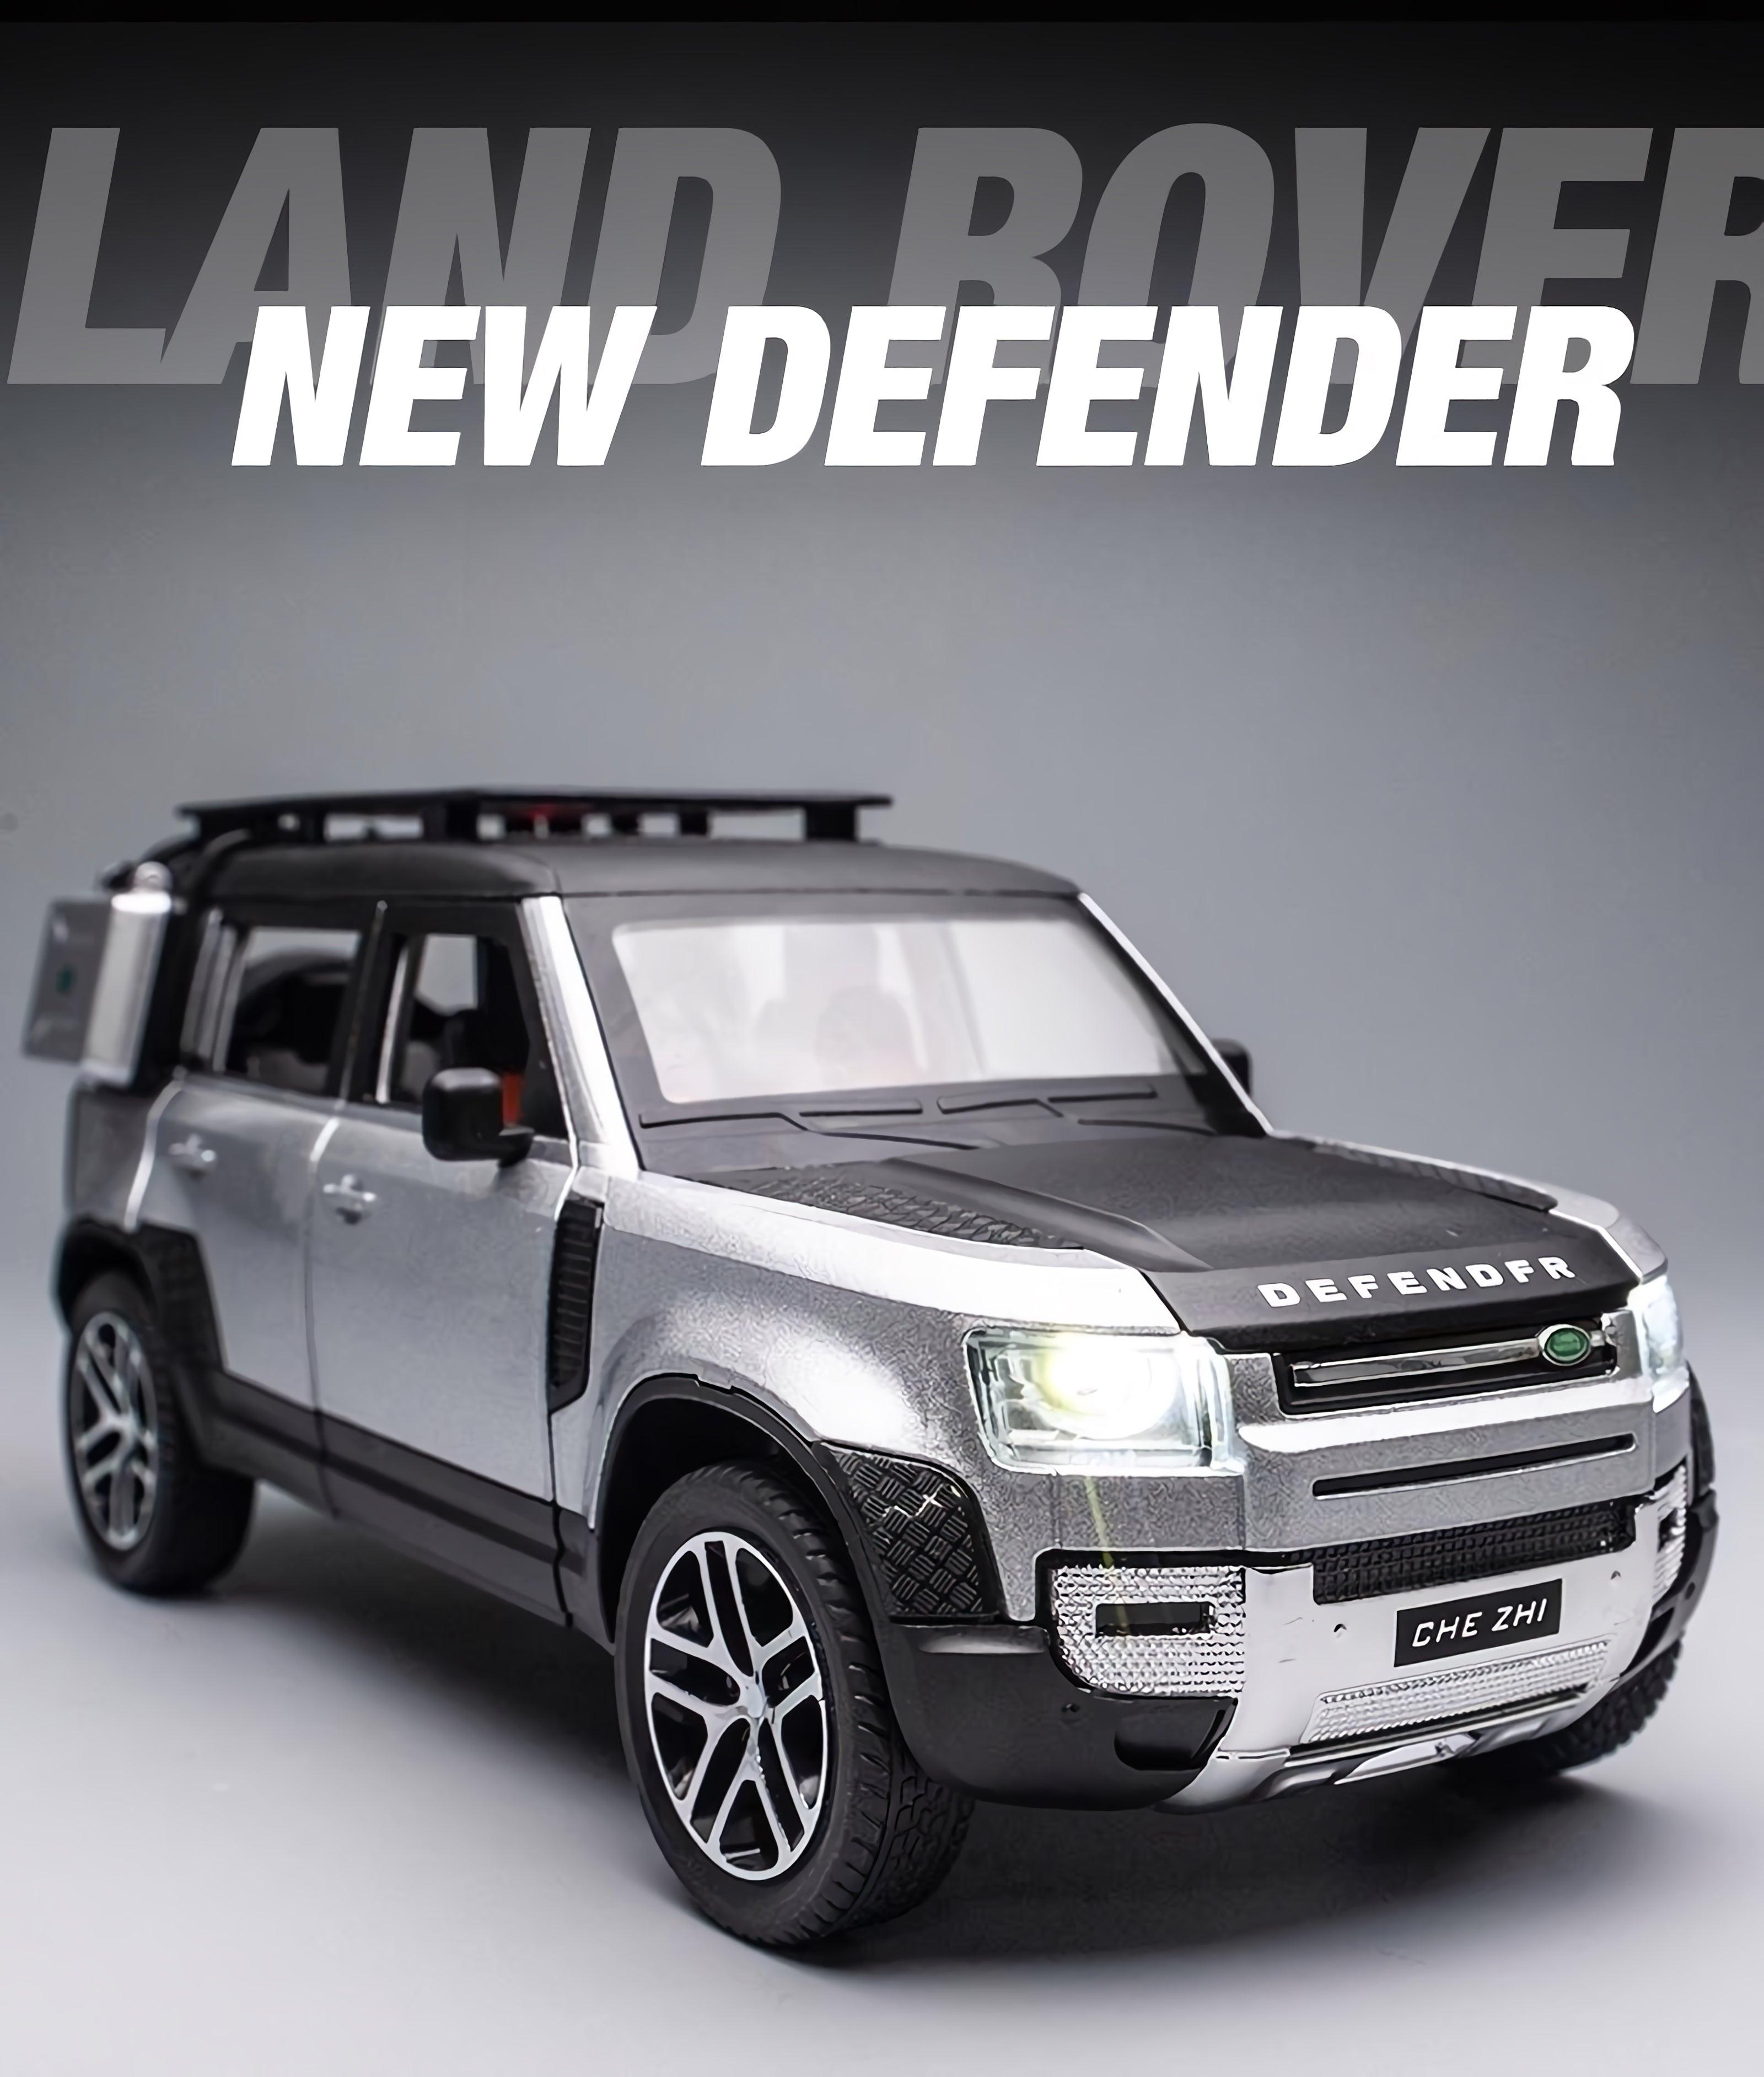 1:24 Scale Land Rover Defender Alloy Die-Cast Model Car - PANSEKtoy